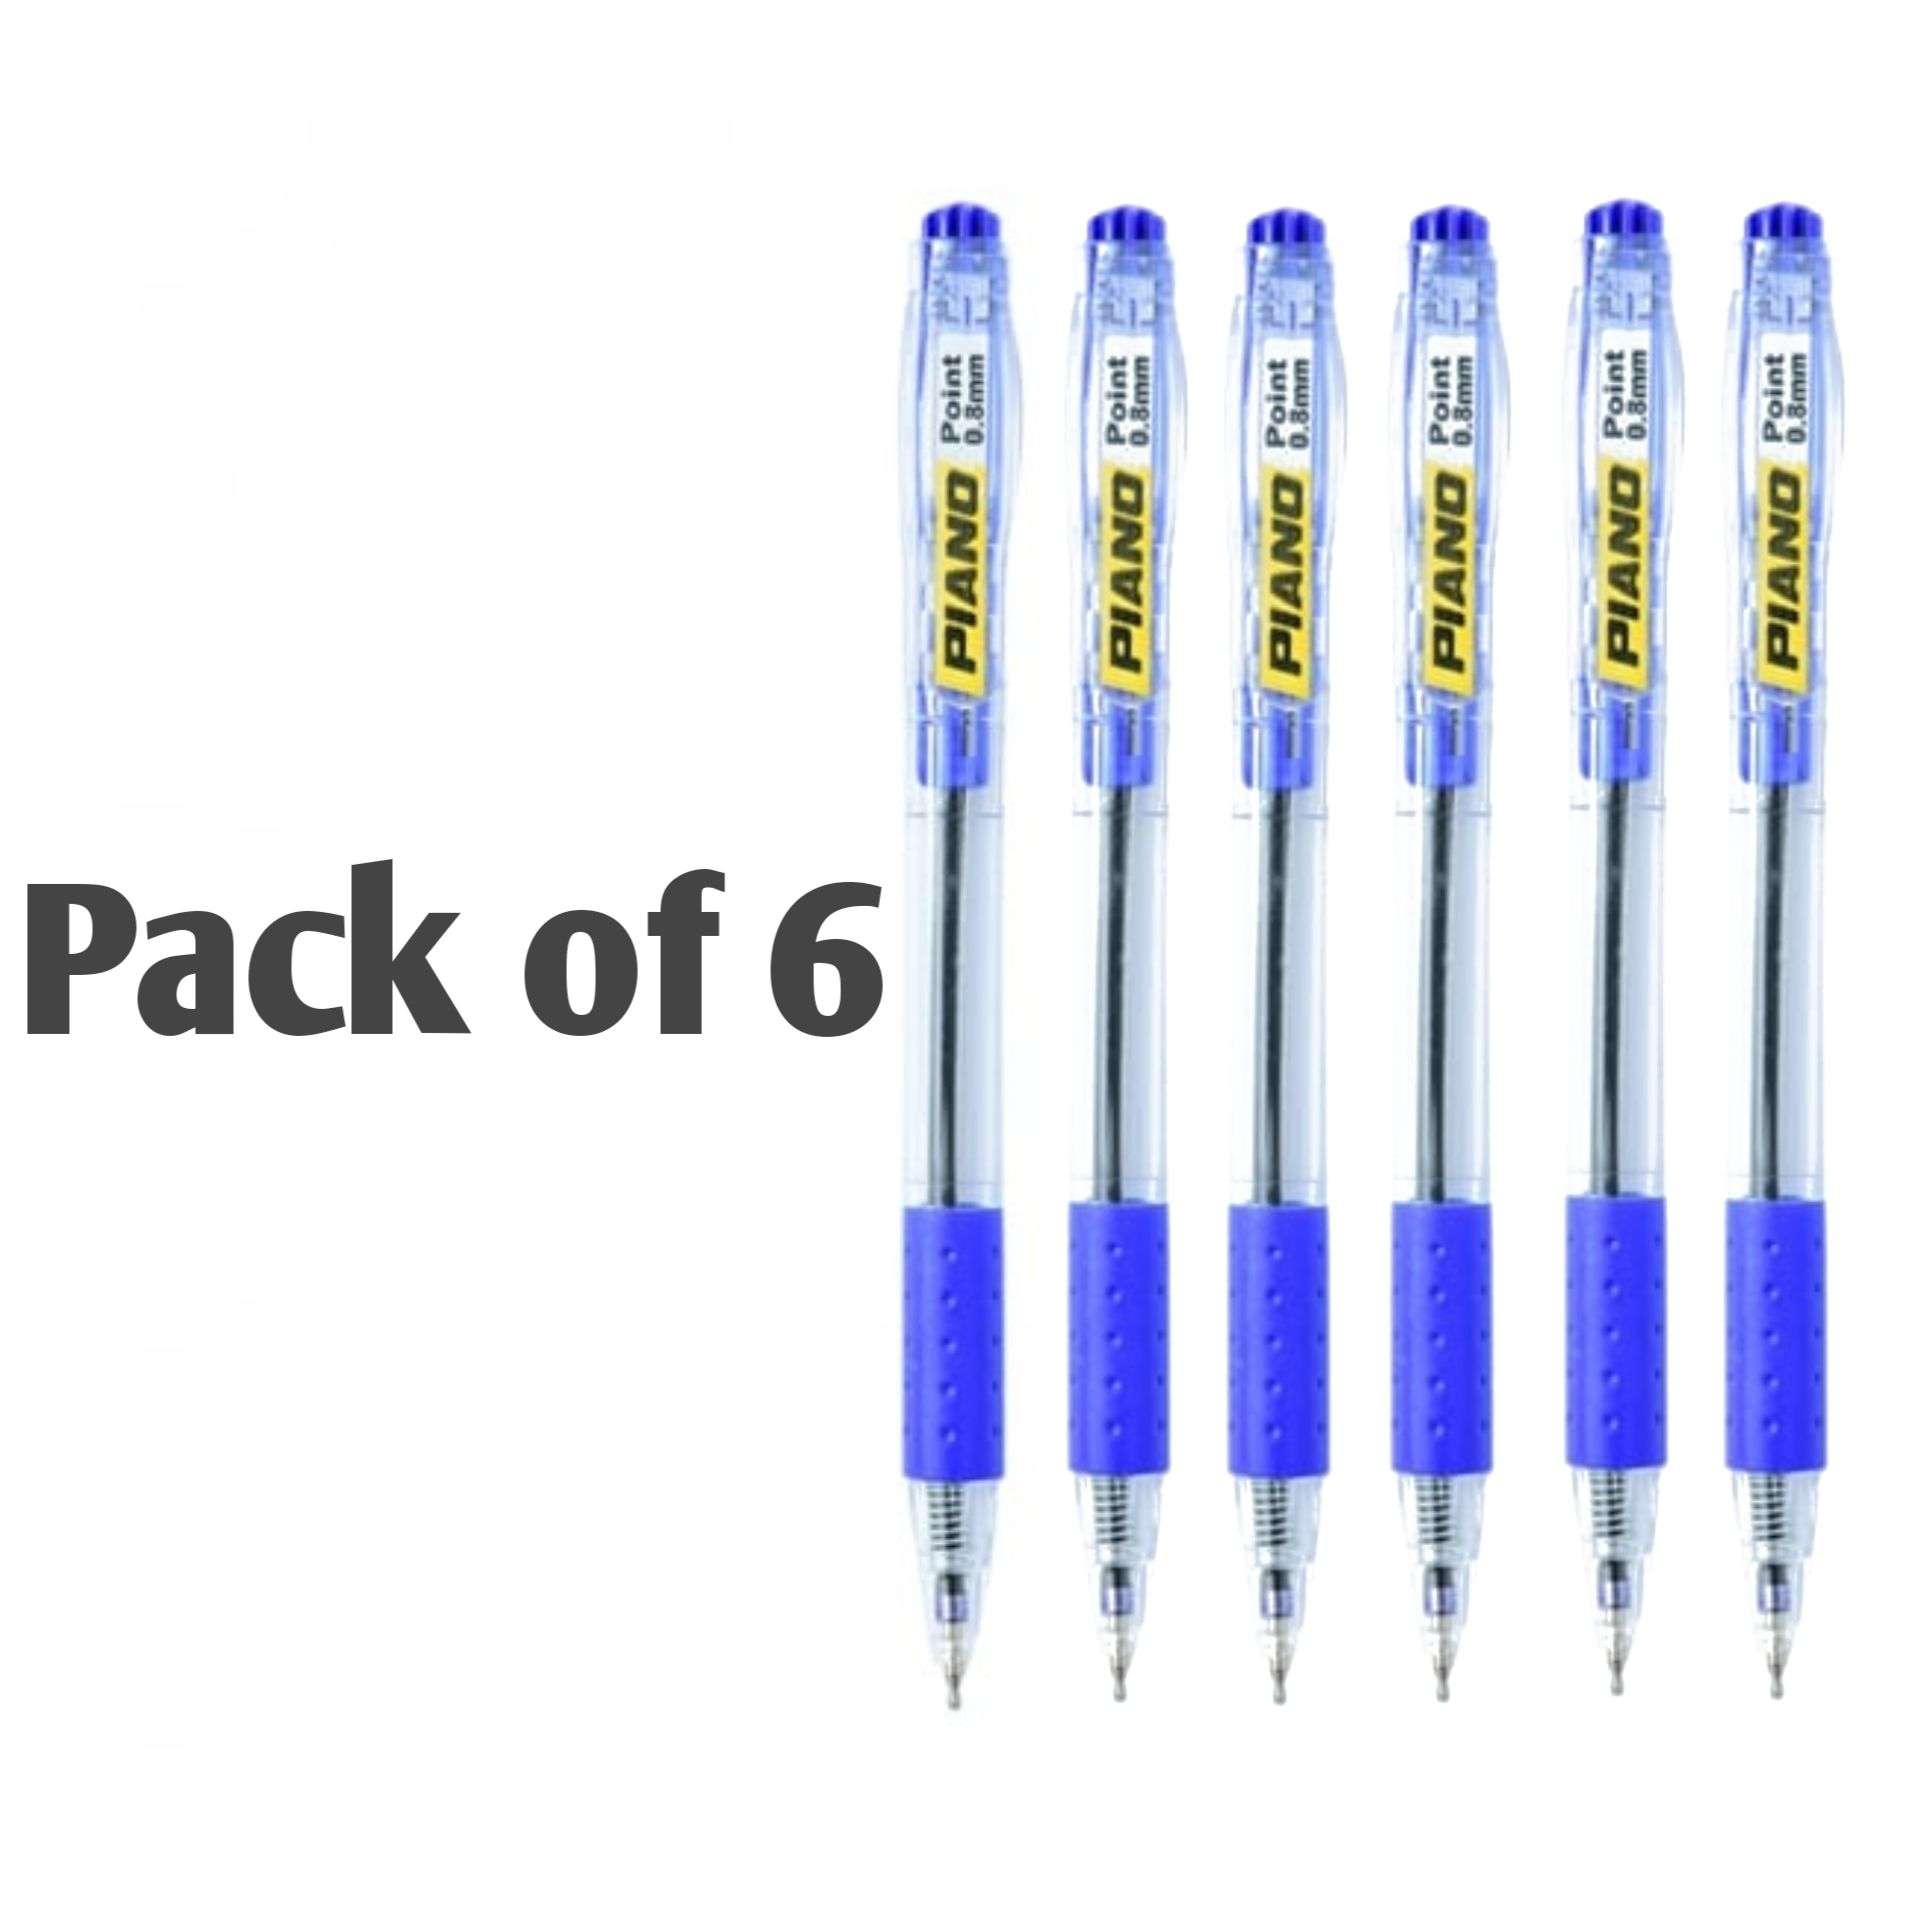 Utron 10 Pack Multicolor Pen, 6-In-1 Colored Multi Color Pen, 0.5